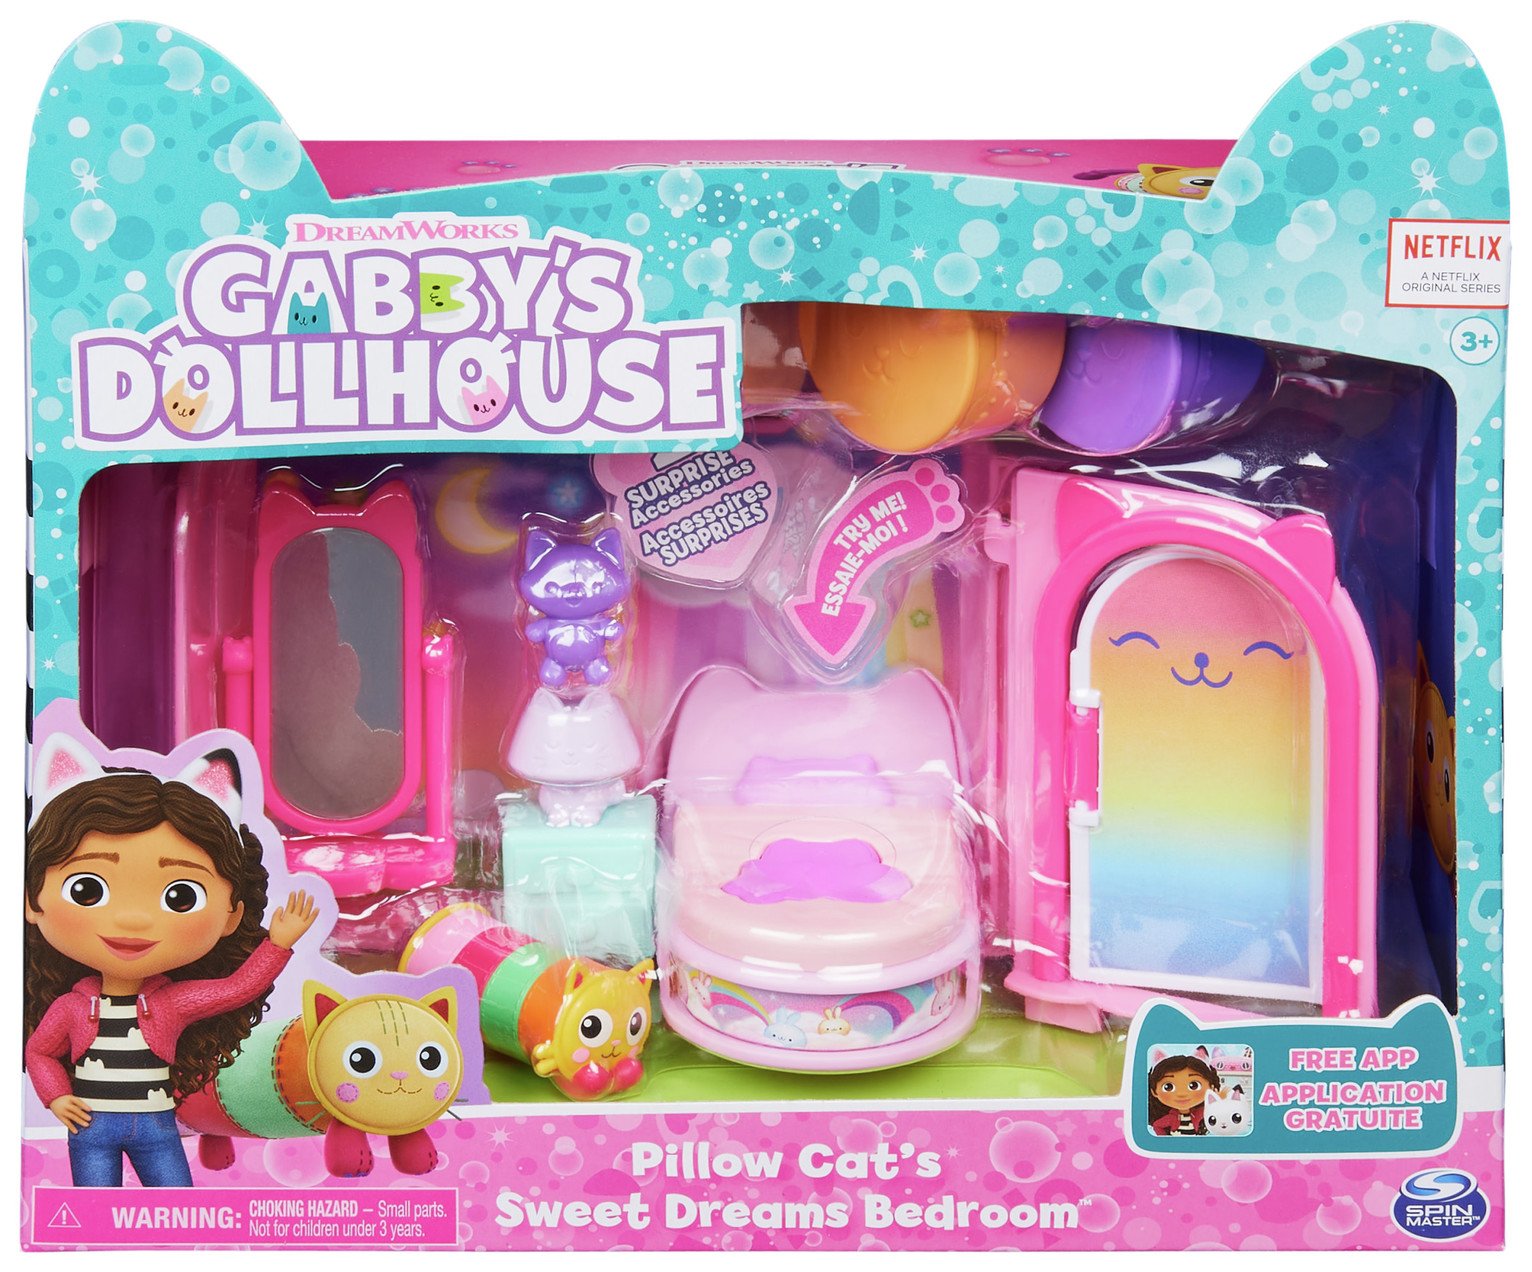 Gabby's Dollhouse Pillow Cat Bedroom